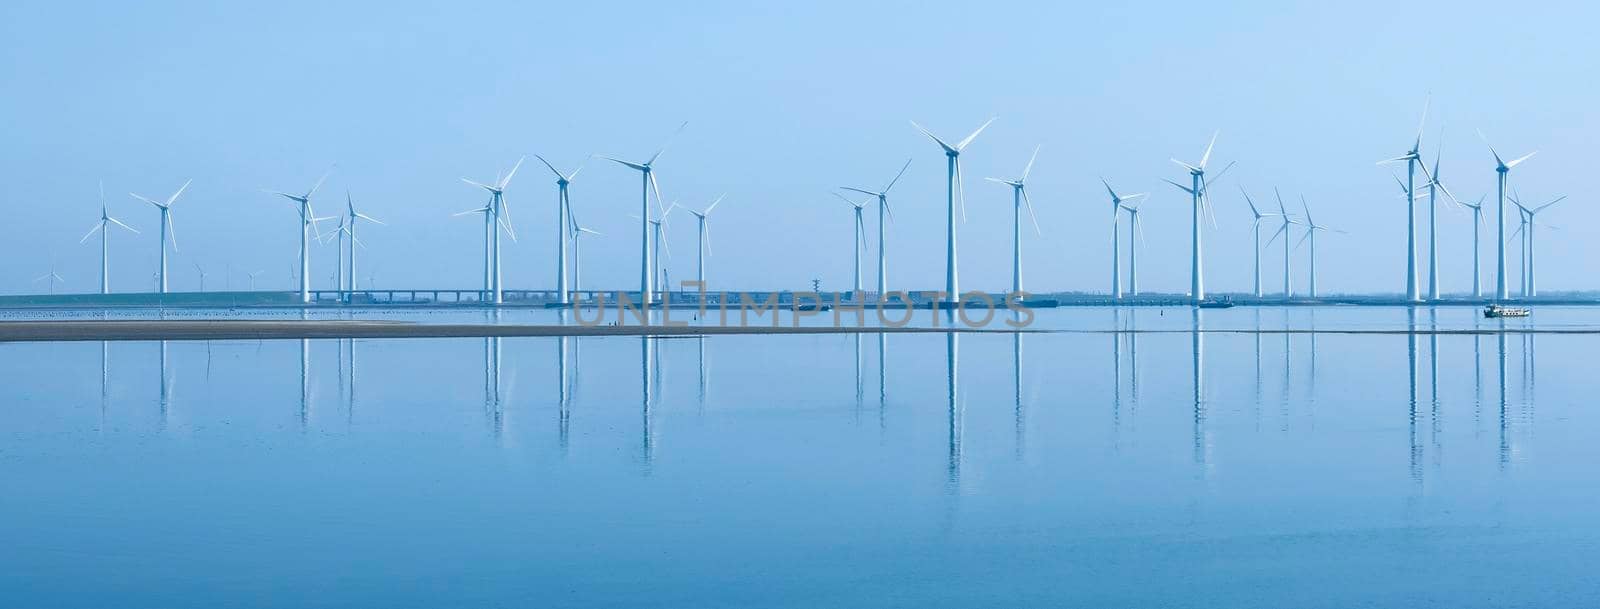 wind turbines reflected in water near philipsdam in dutch province of zeeland under blue sky